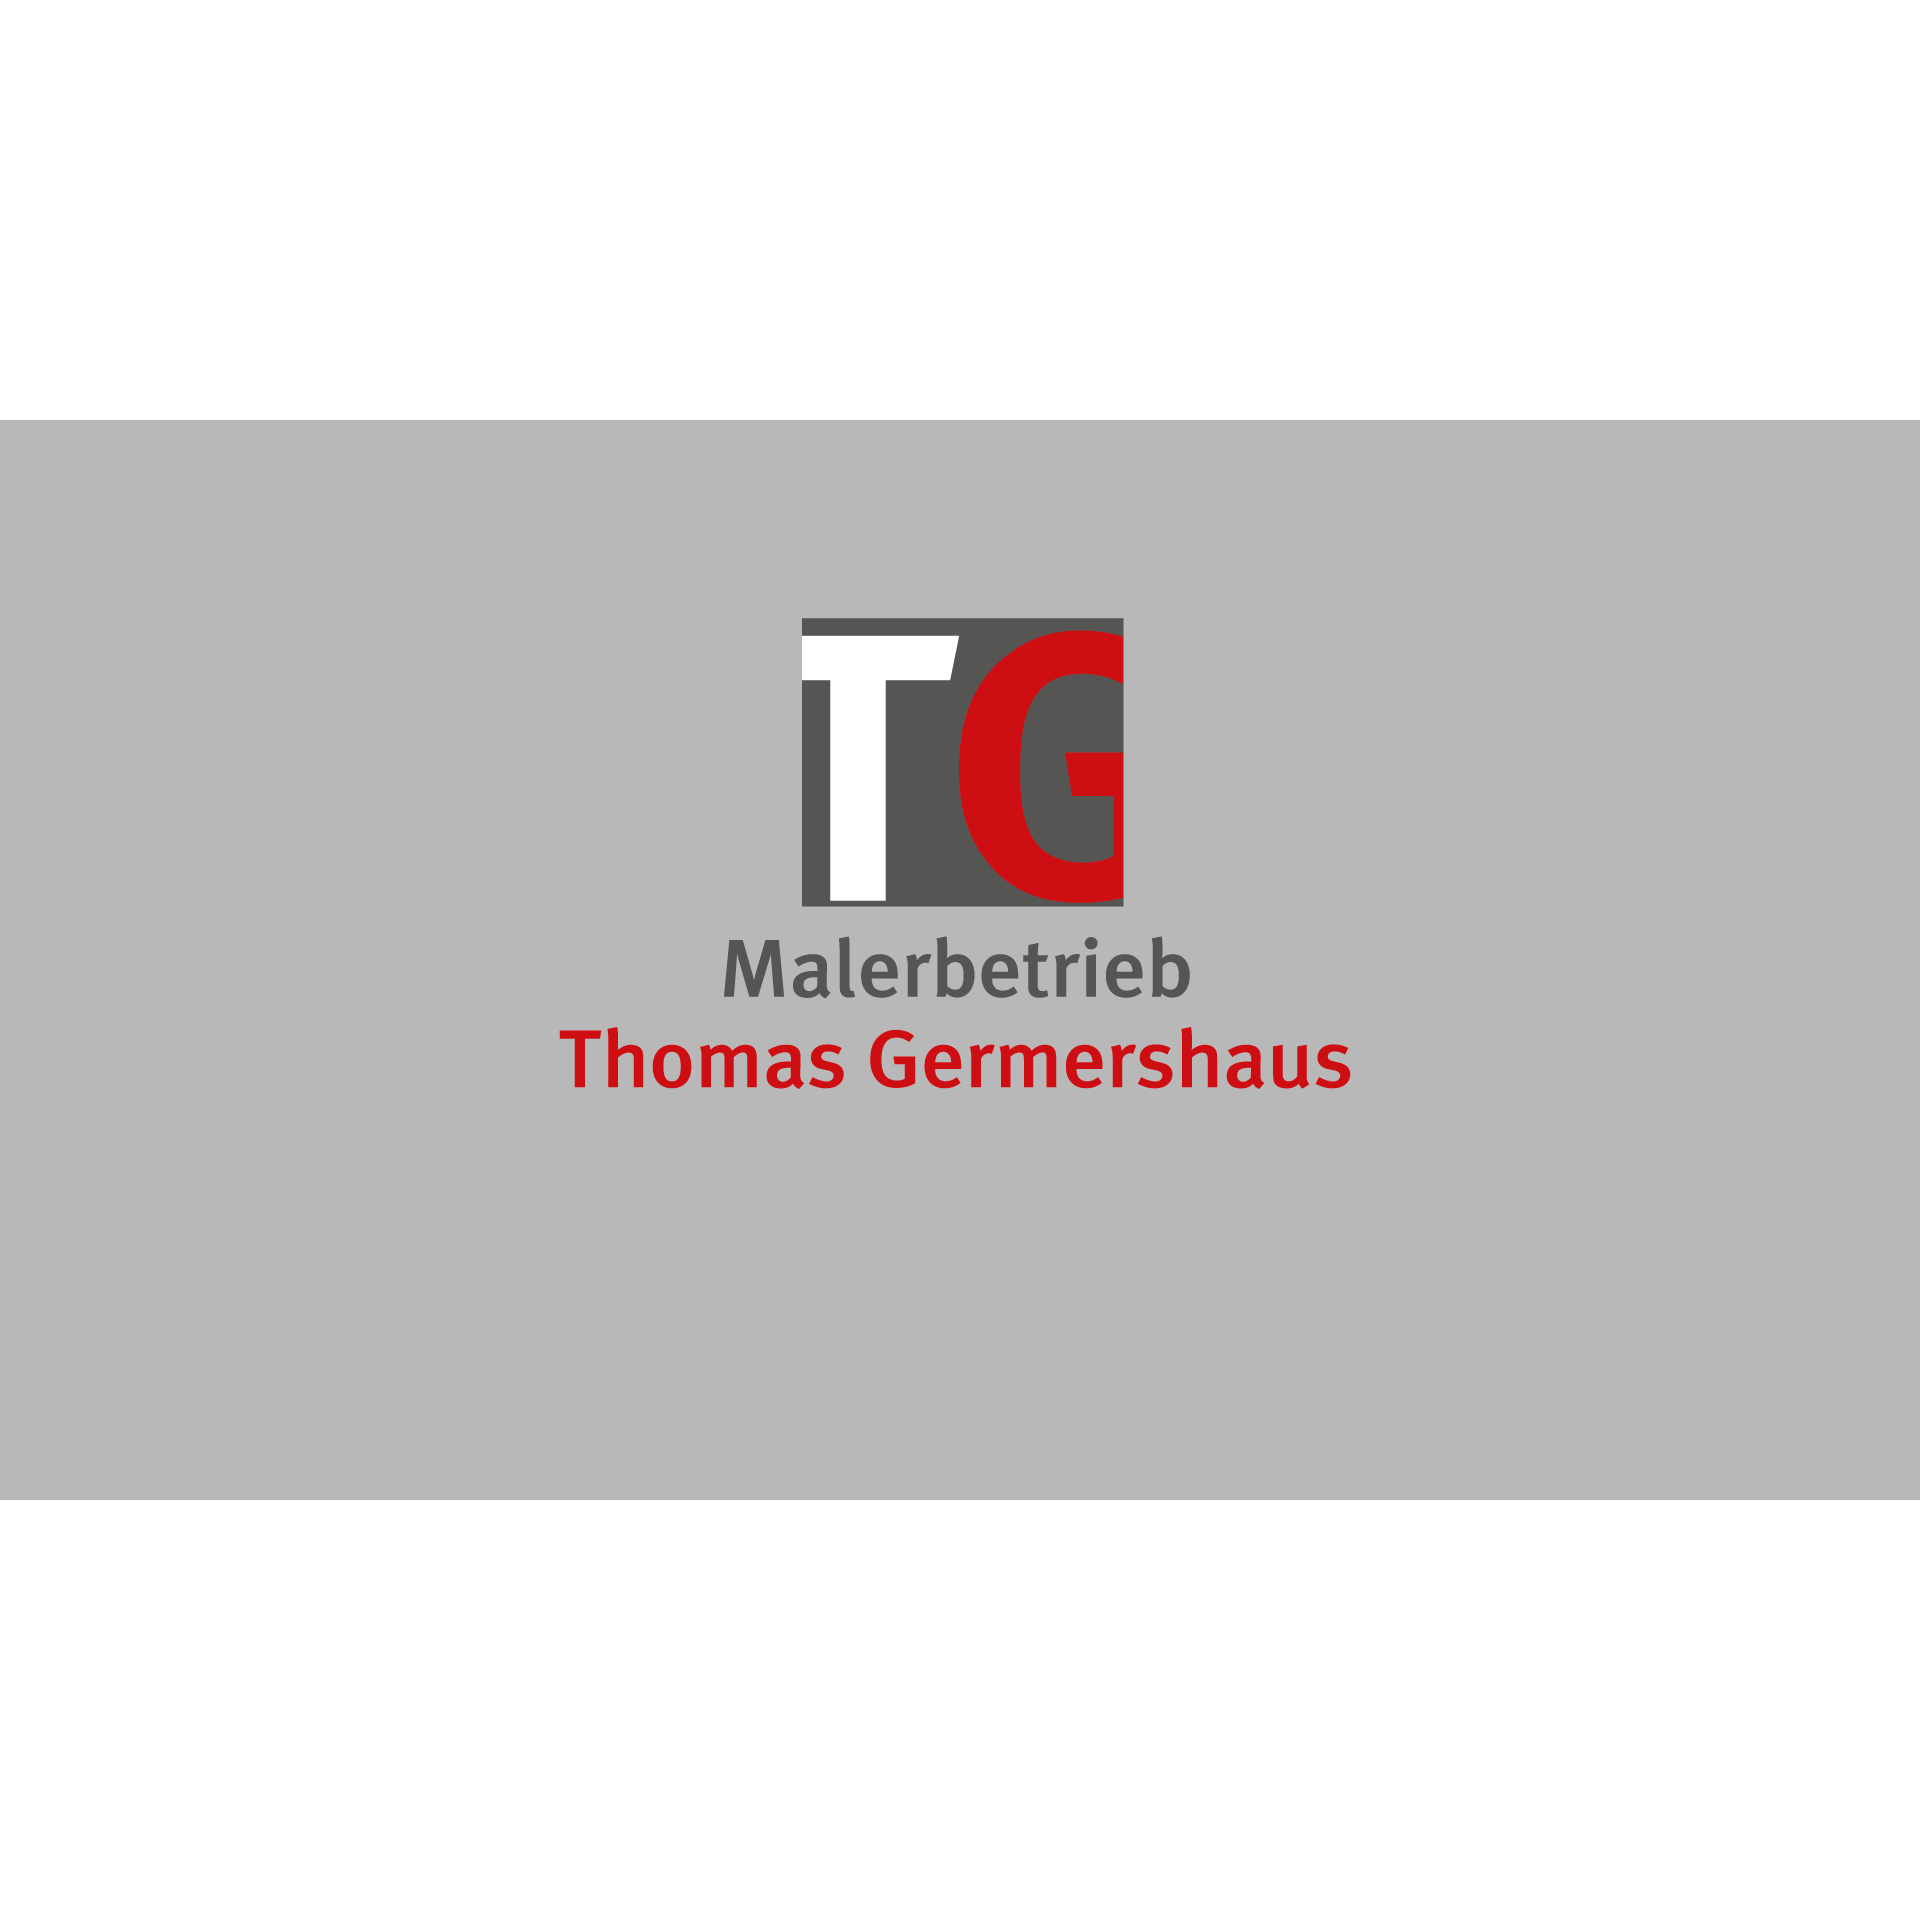 Malerbetrieb Thomas Germershaus in Bad Heilbrunn - Logo